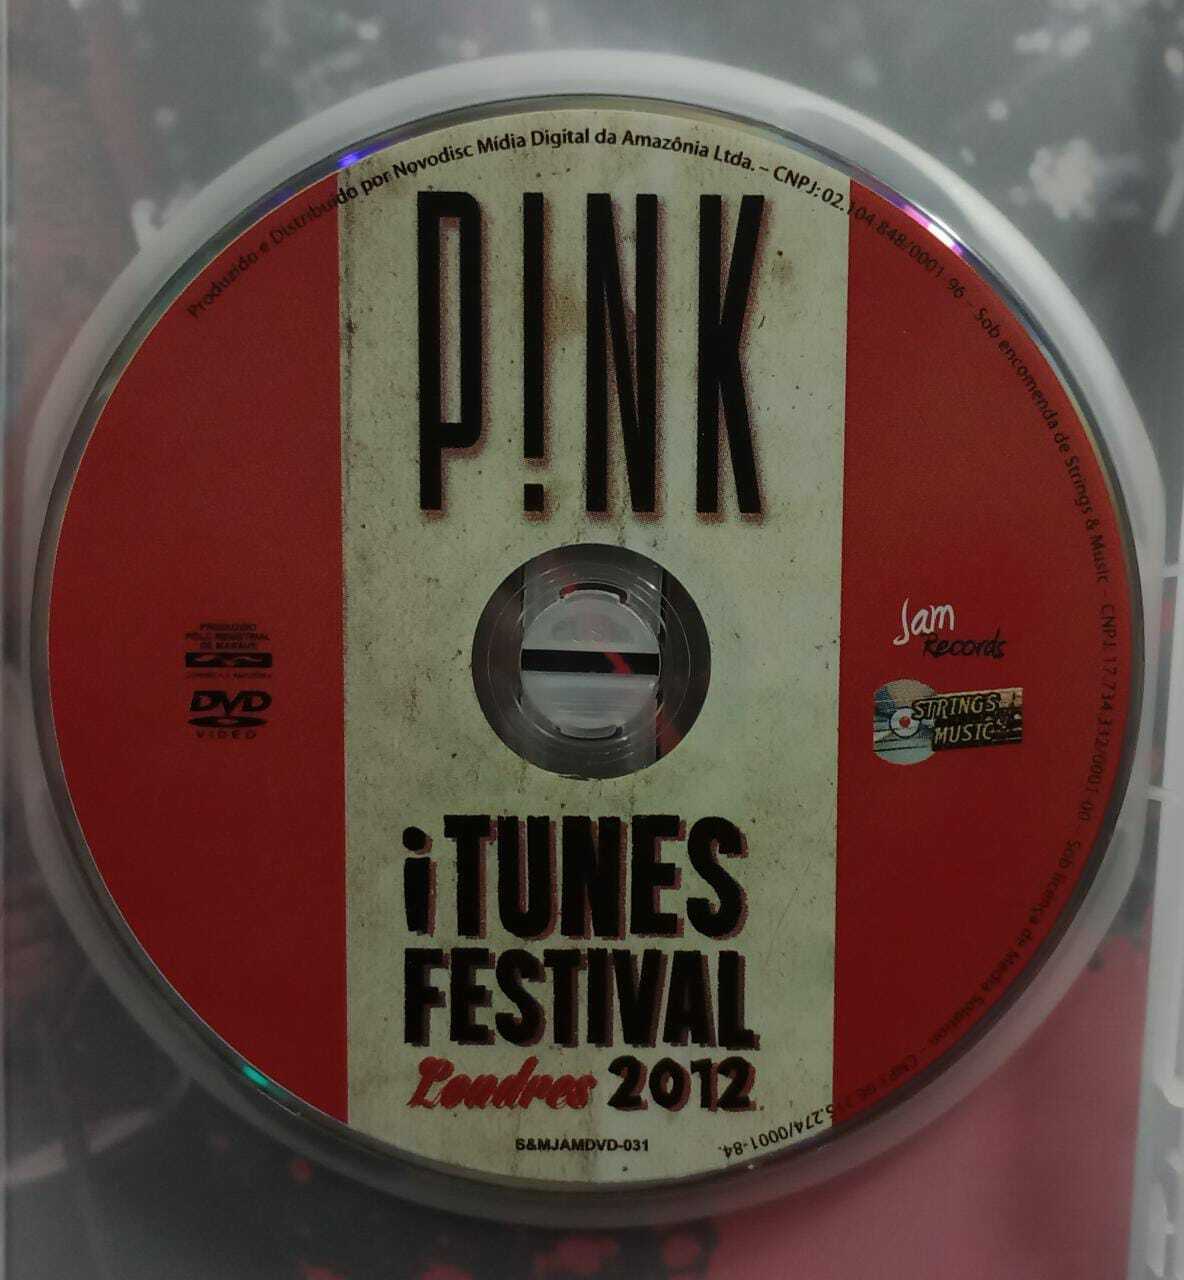 DVD - Pink - Itunes Festival London 2012